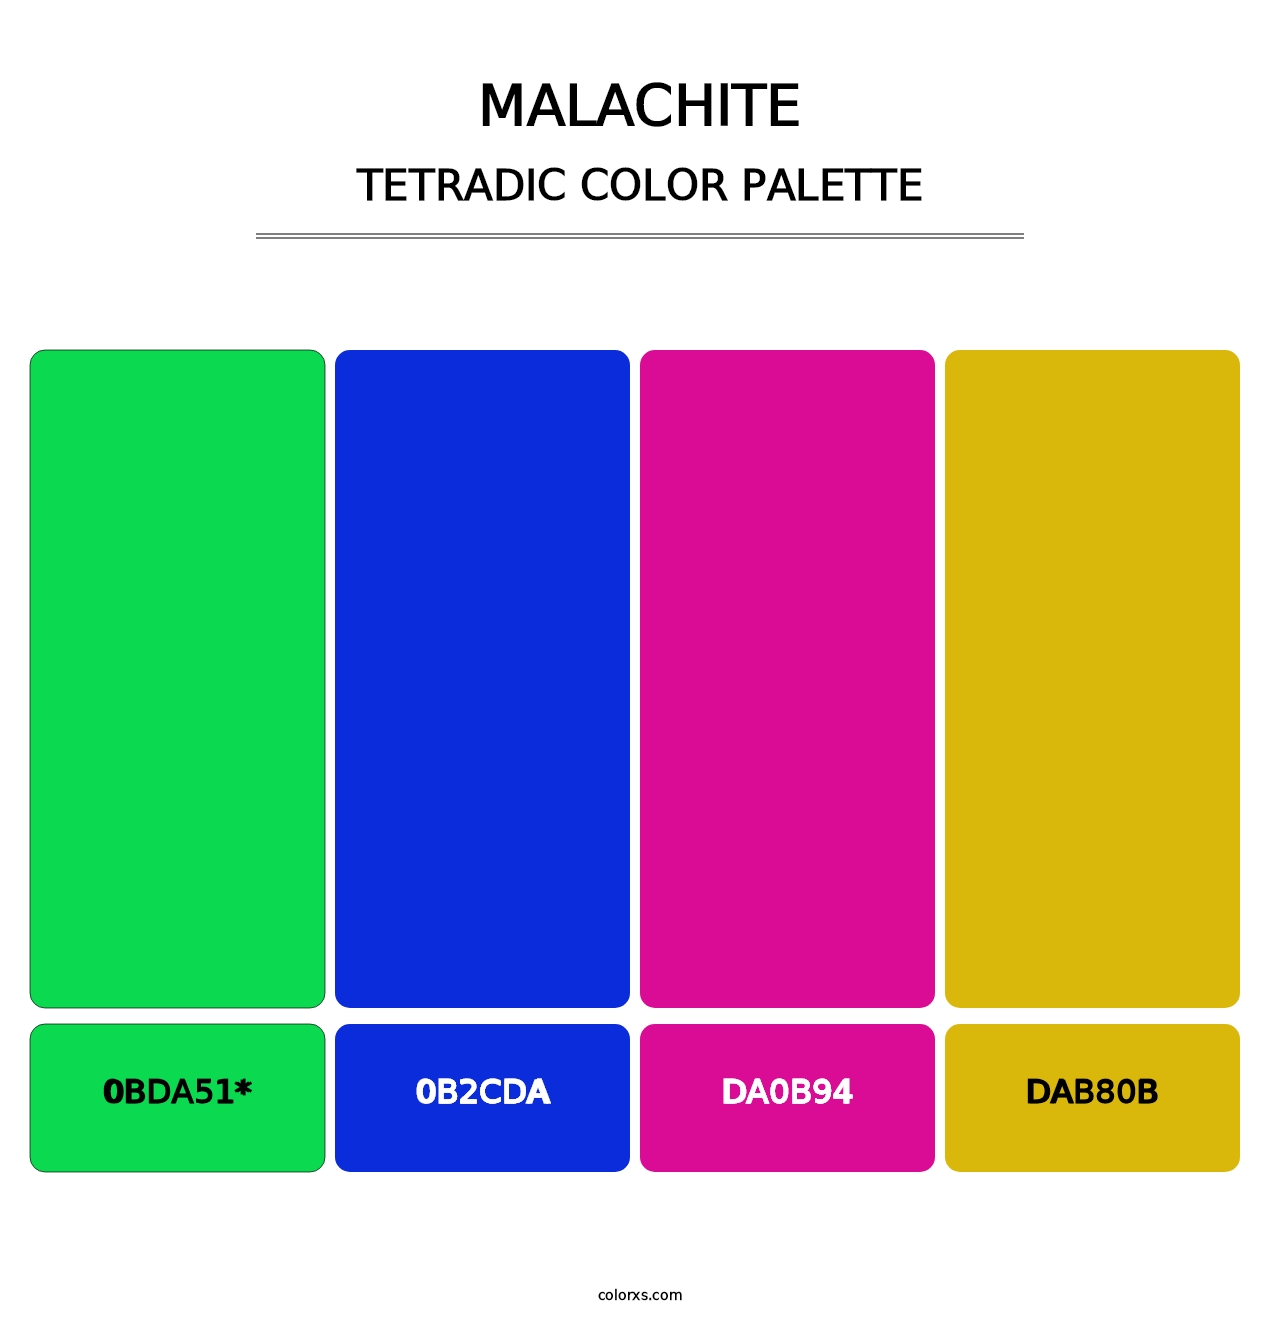 Malachite - Tetradic Color Palette